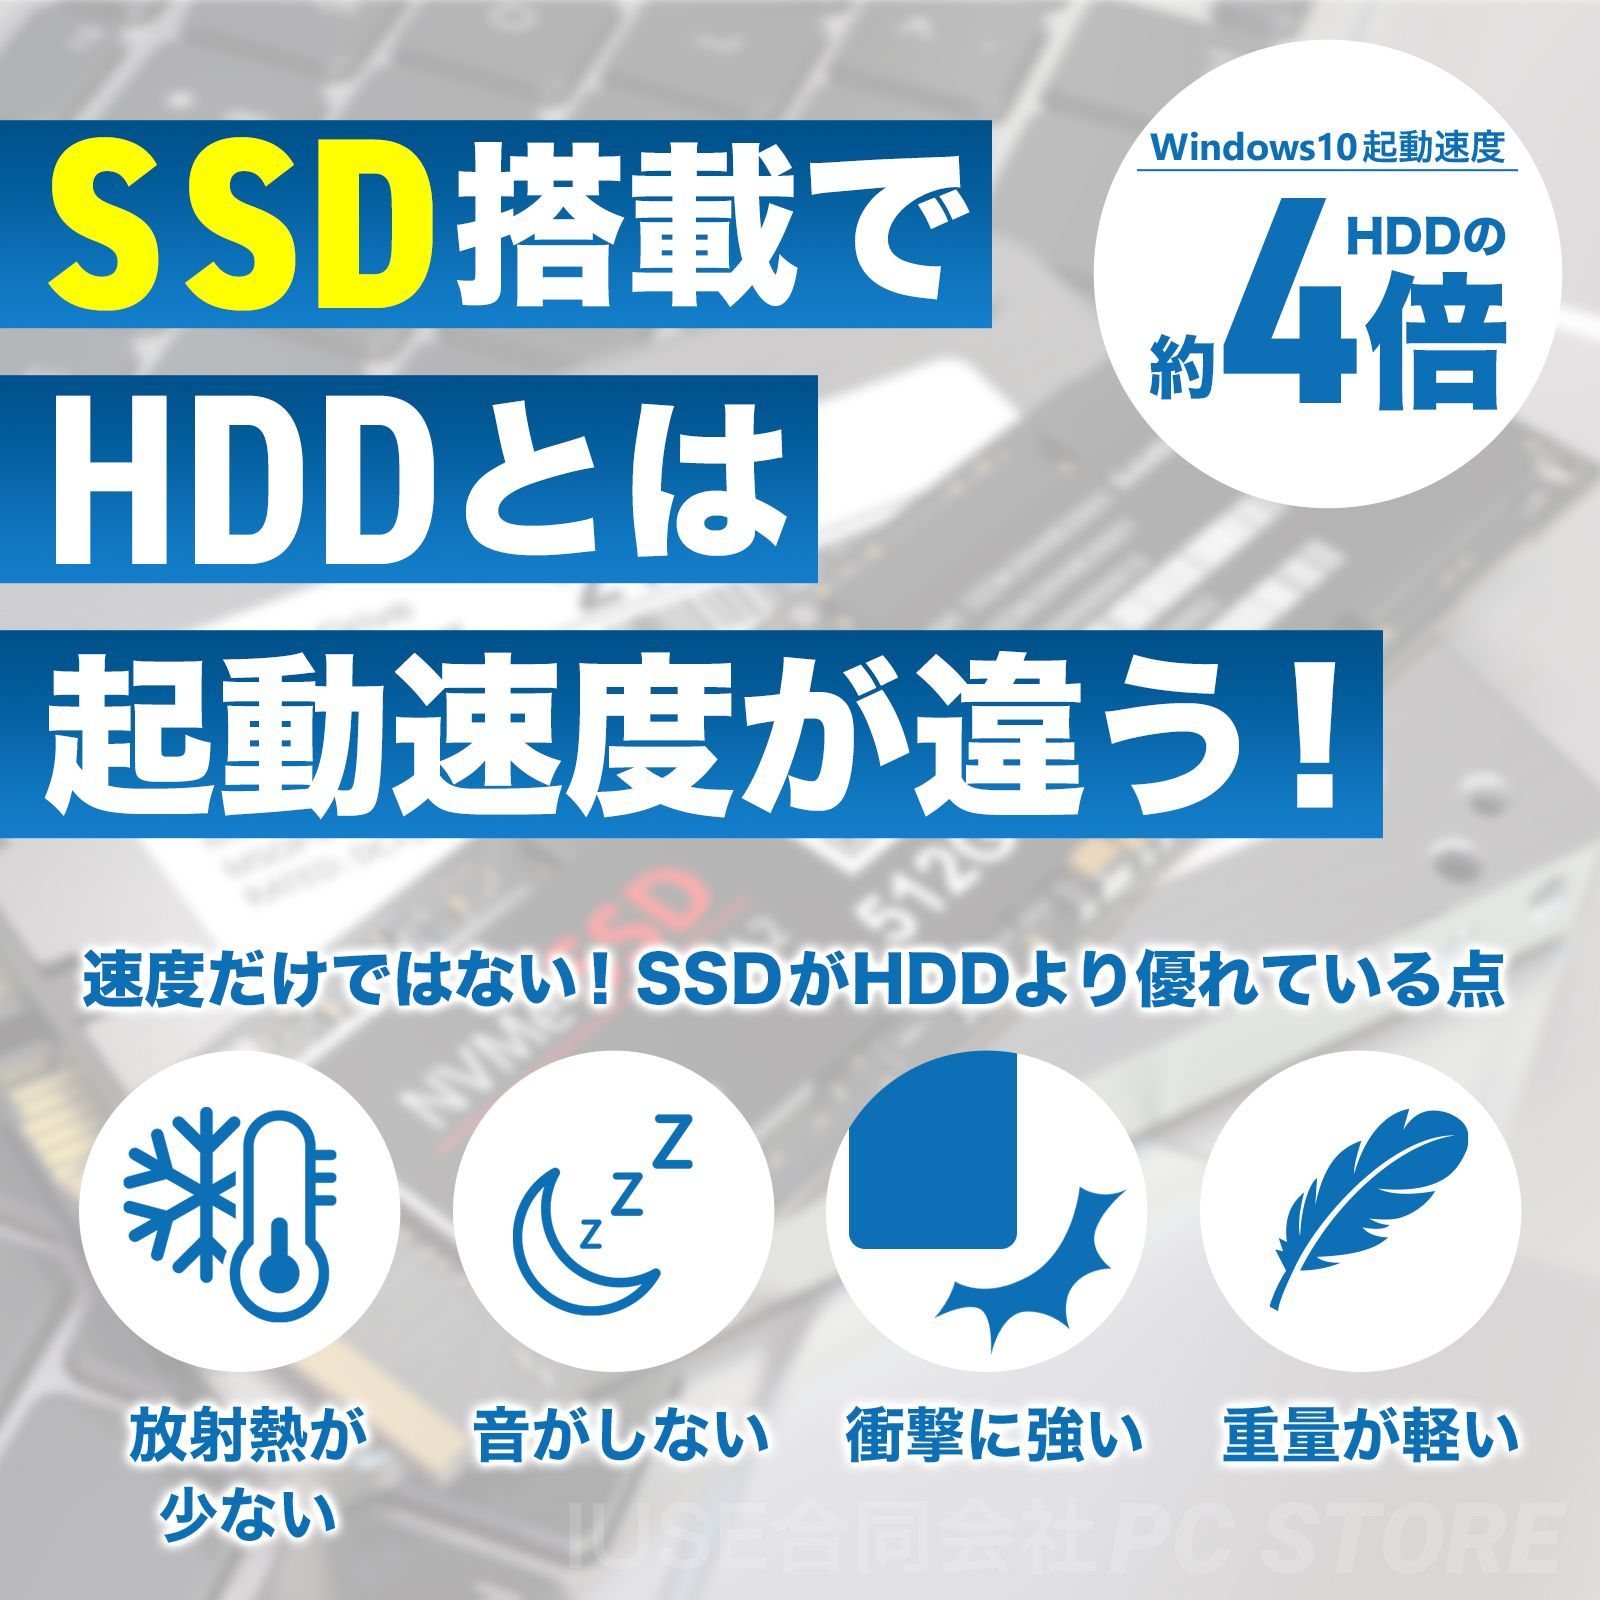 TOSHIBA dynabook R63/J 最新Windows11搭載 13.3インチ/第8世代Core i5-8250U/メモリ16GB/新品SSD512GB  Microsoft Office 2019 HB(Word/Excel/PowerPoint) PC STORE メルカリShops店  メルカリ